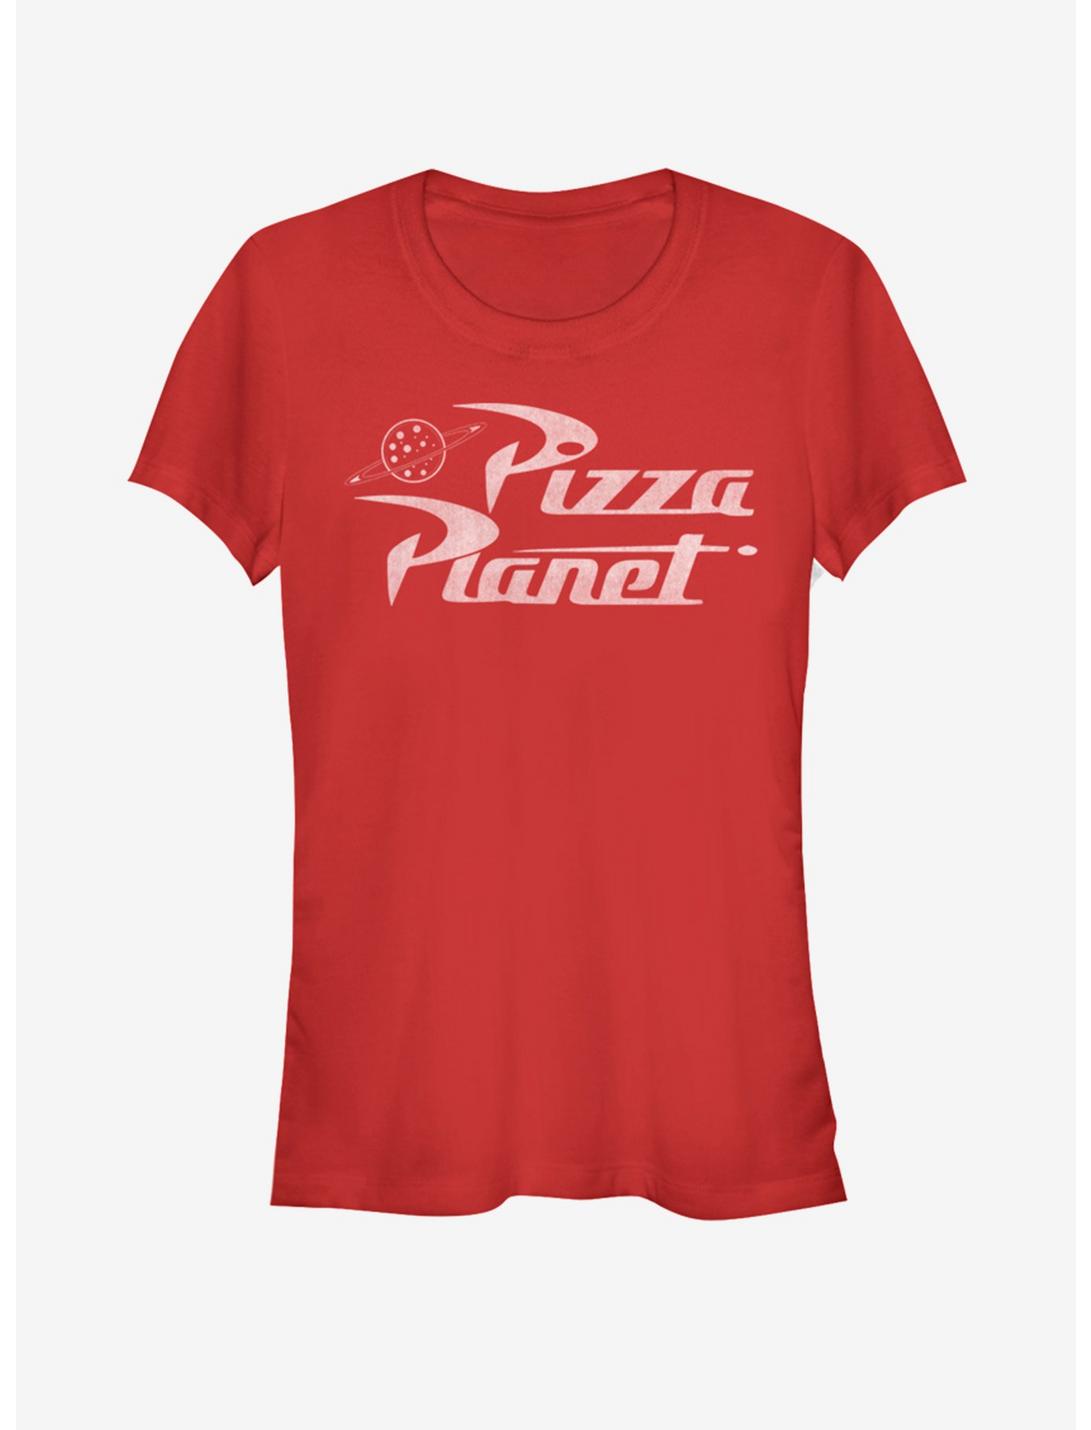 Disney Pixar Toy Story Pizza Planet Girls T-Shirt, RED, hi-res